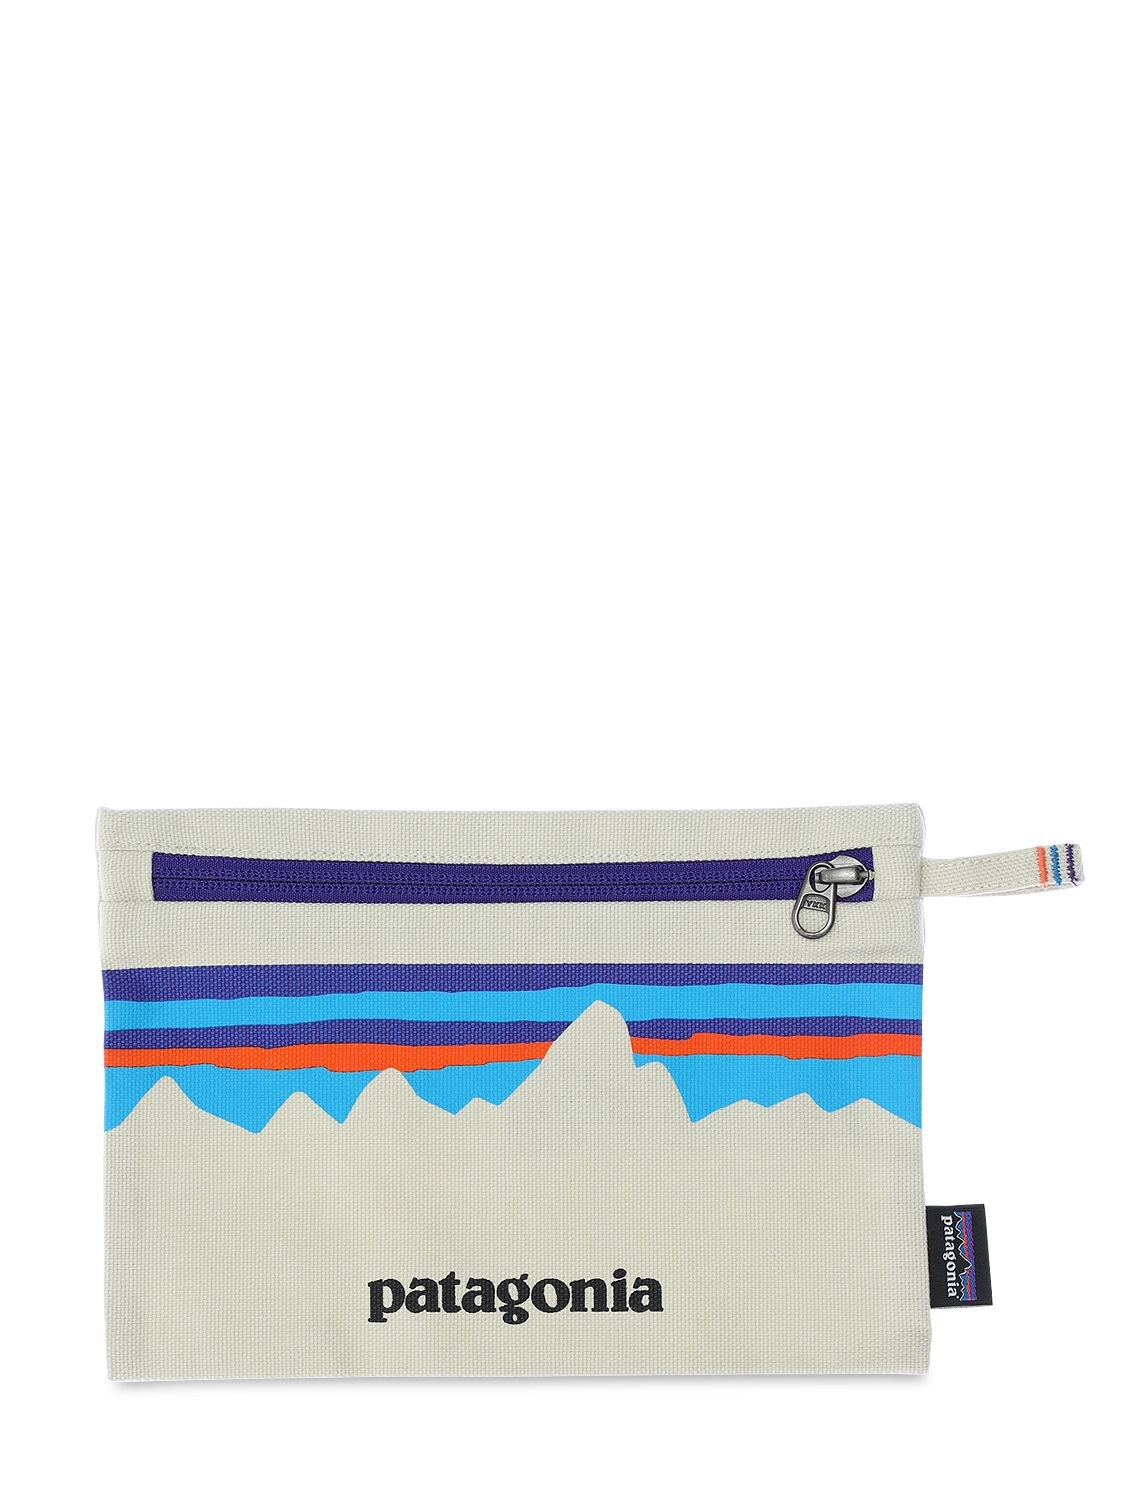 Patagonia 有机纯棉拉链小袋 In Steinfarben